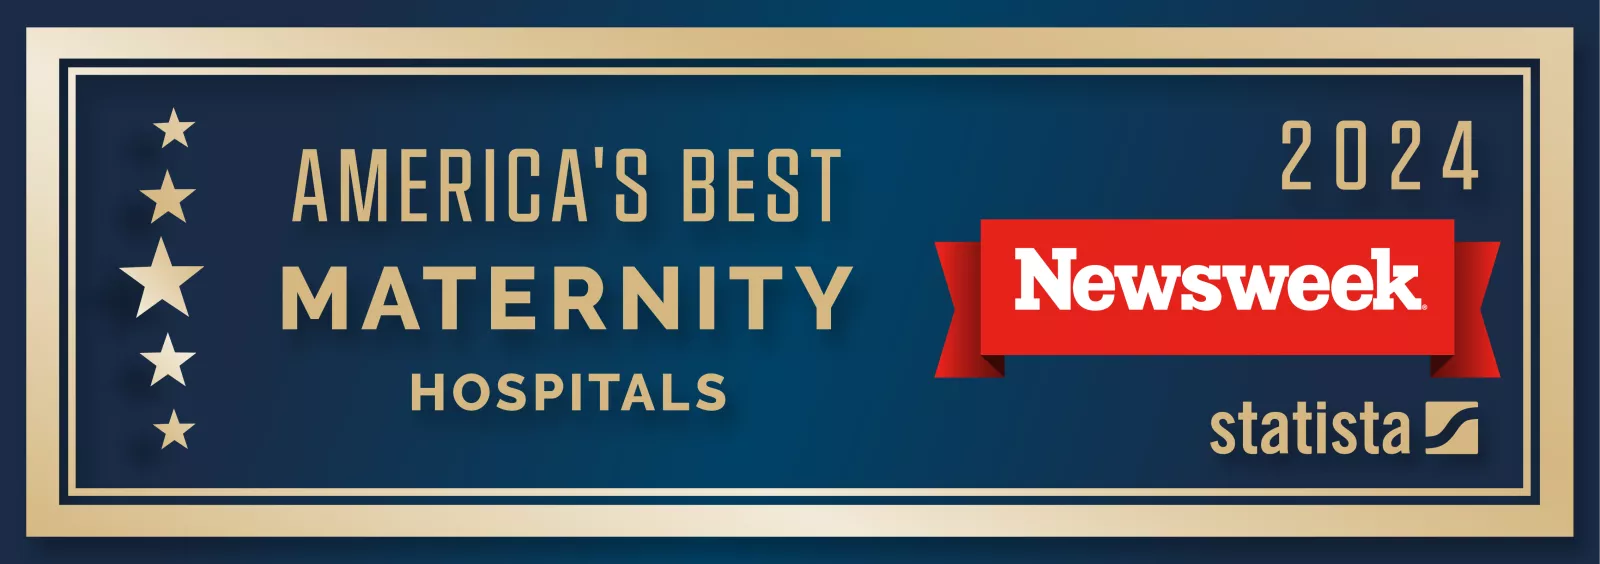 Newsweek America's Best Maternity Hospitals 2024 logo